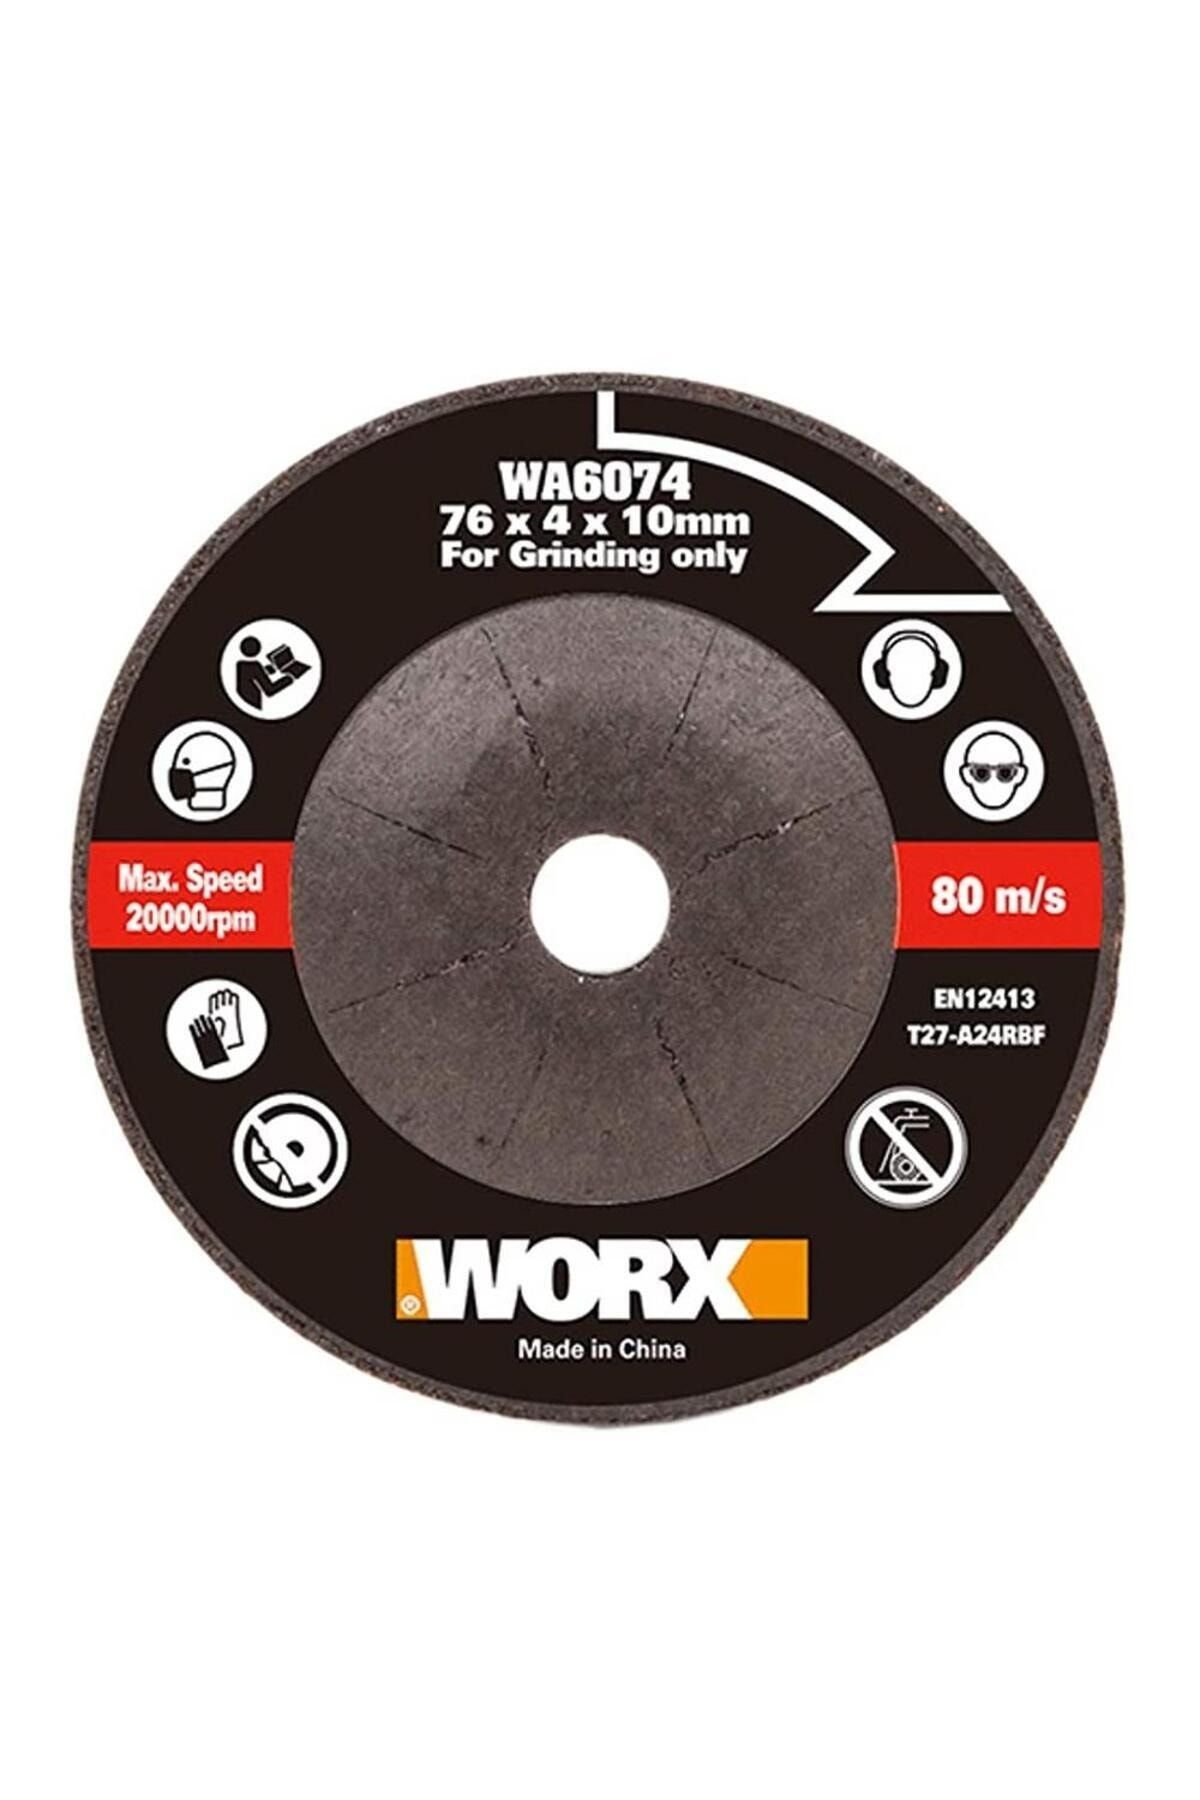 Worx WA6074 WX801 İçin 76x10mm Metal Taşlama Taşı